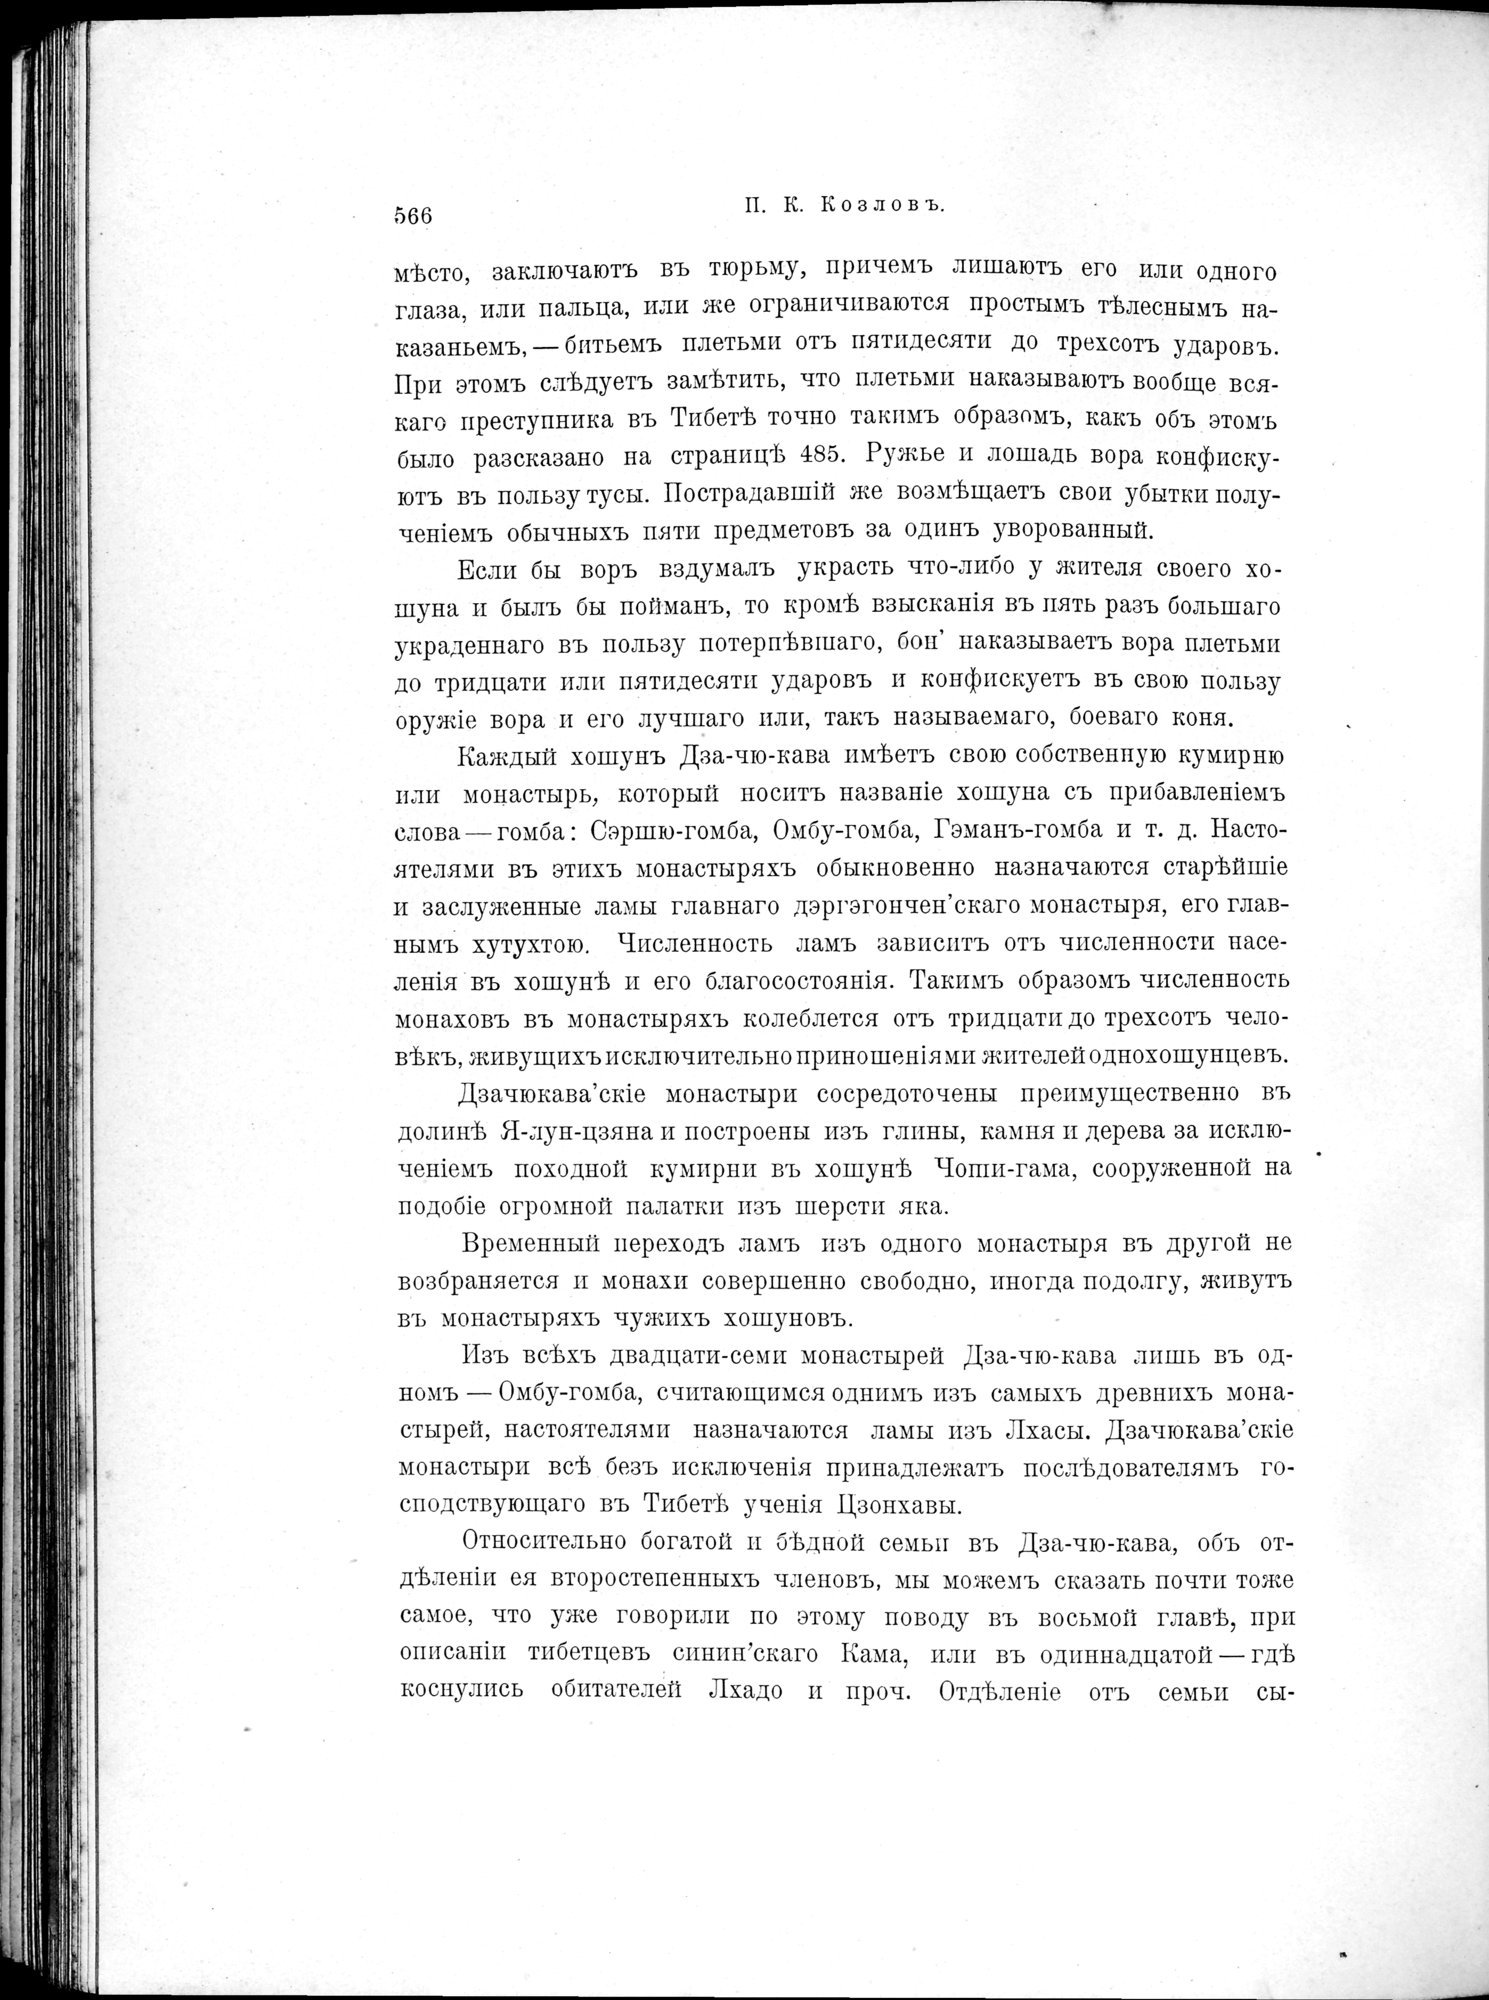 Mongoliia i Kam : vol.2 / Page 390 (Grayscale High Resolution Image)